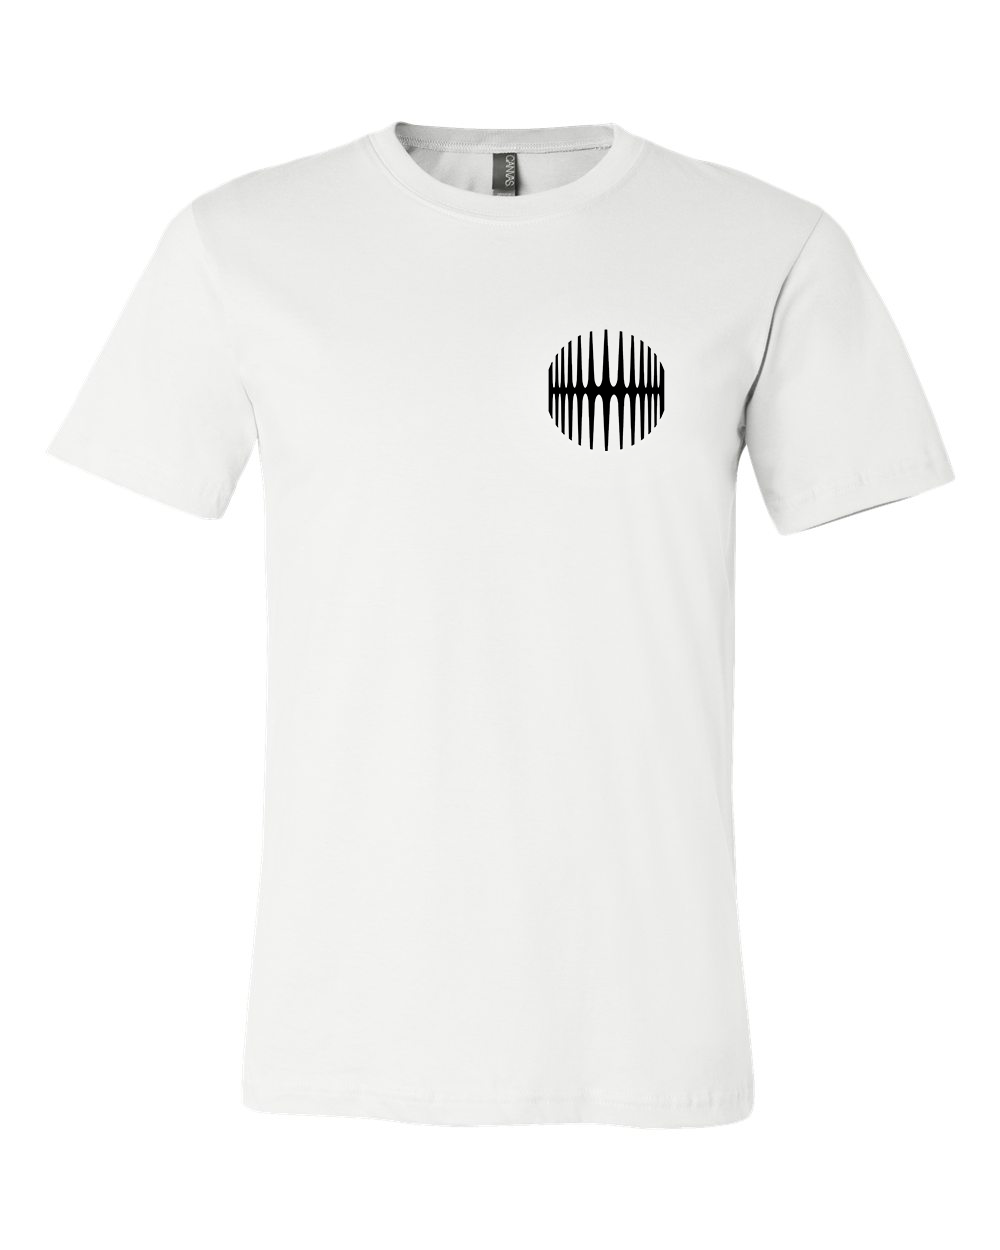 Elliptical Sun Music Split Logo T-Shirt - White - MY MUSIC MERCH